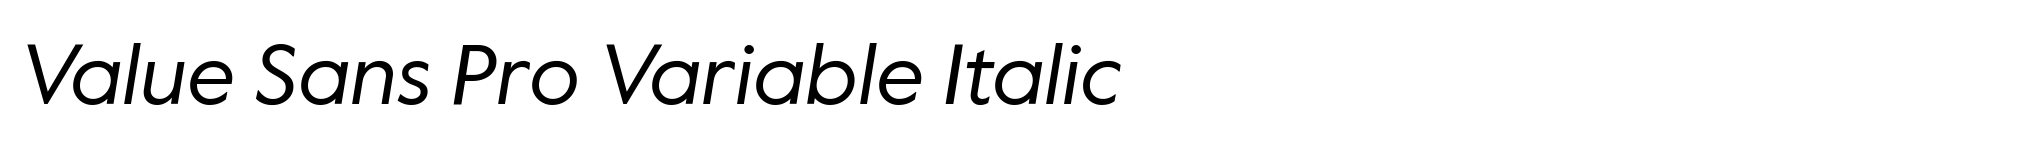 Value Sans Pro Variable Italic image